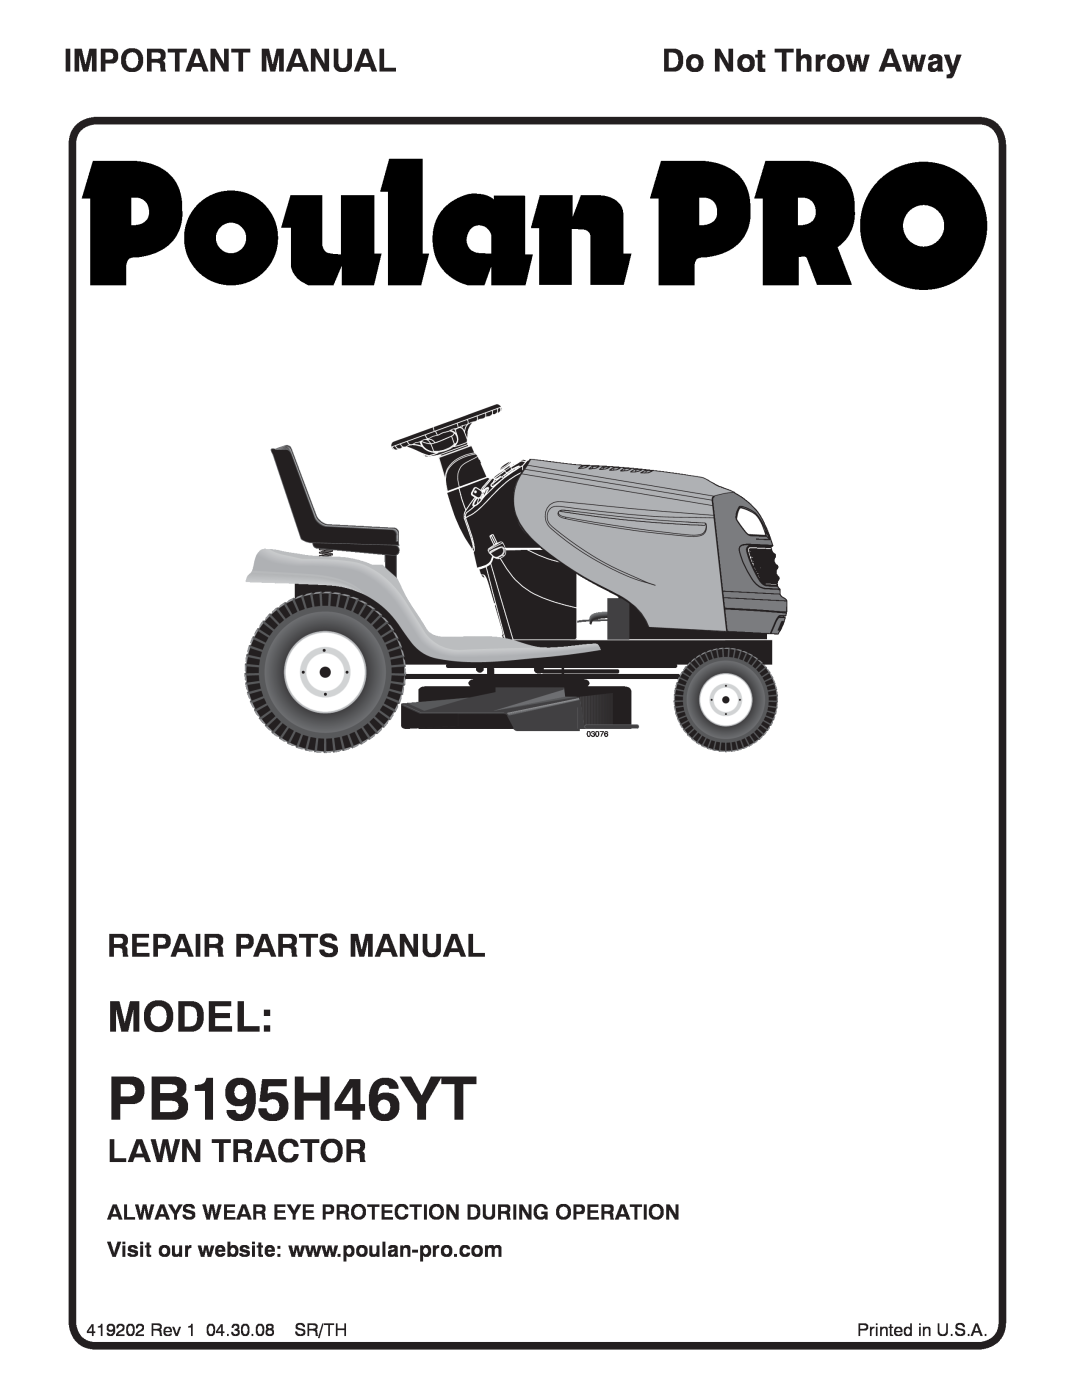 Poulan 96042005901 manual Important Manual, Repair Parts Manual, Lawn Tractor, Do Not Throw Away, PB195H46YT, Model, 03076 